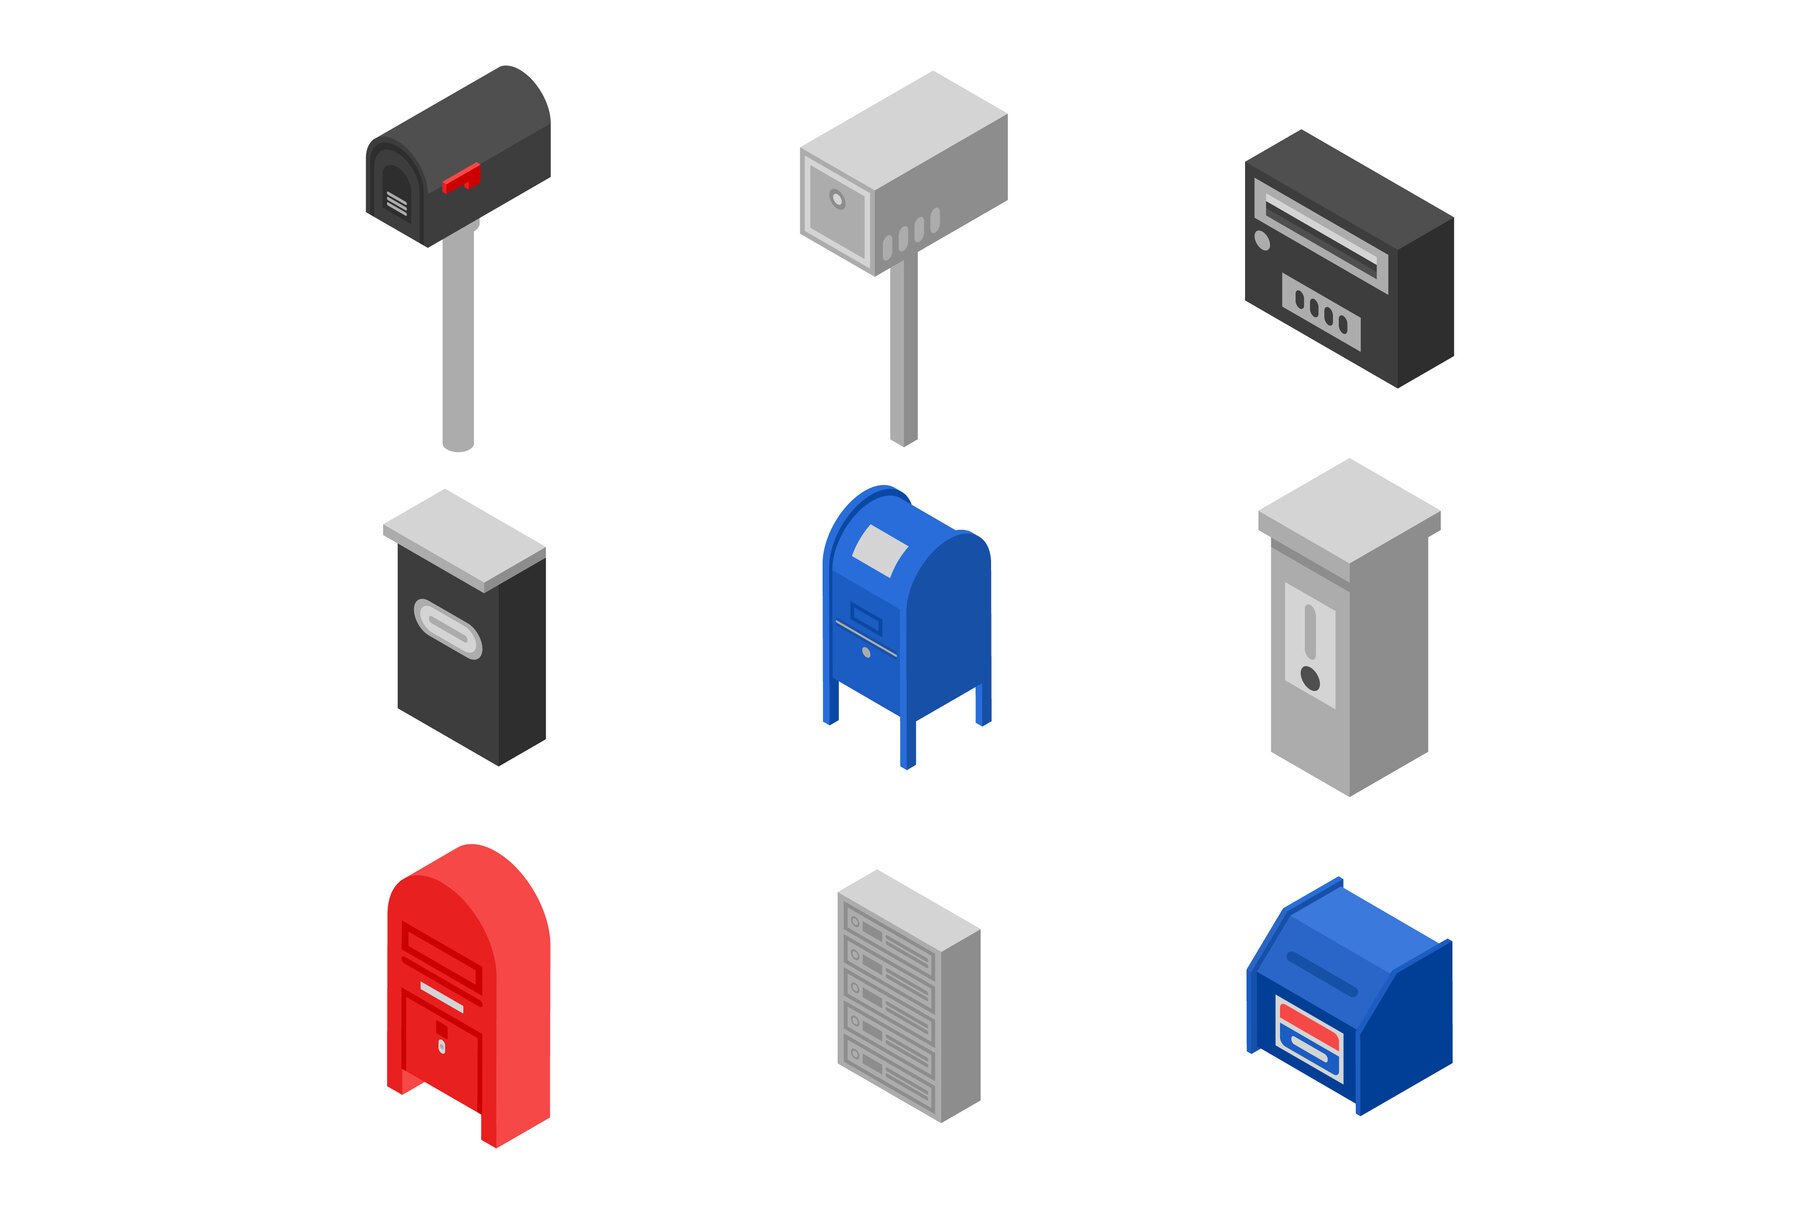 Mailbox icons set, isometric style cover image.